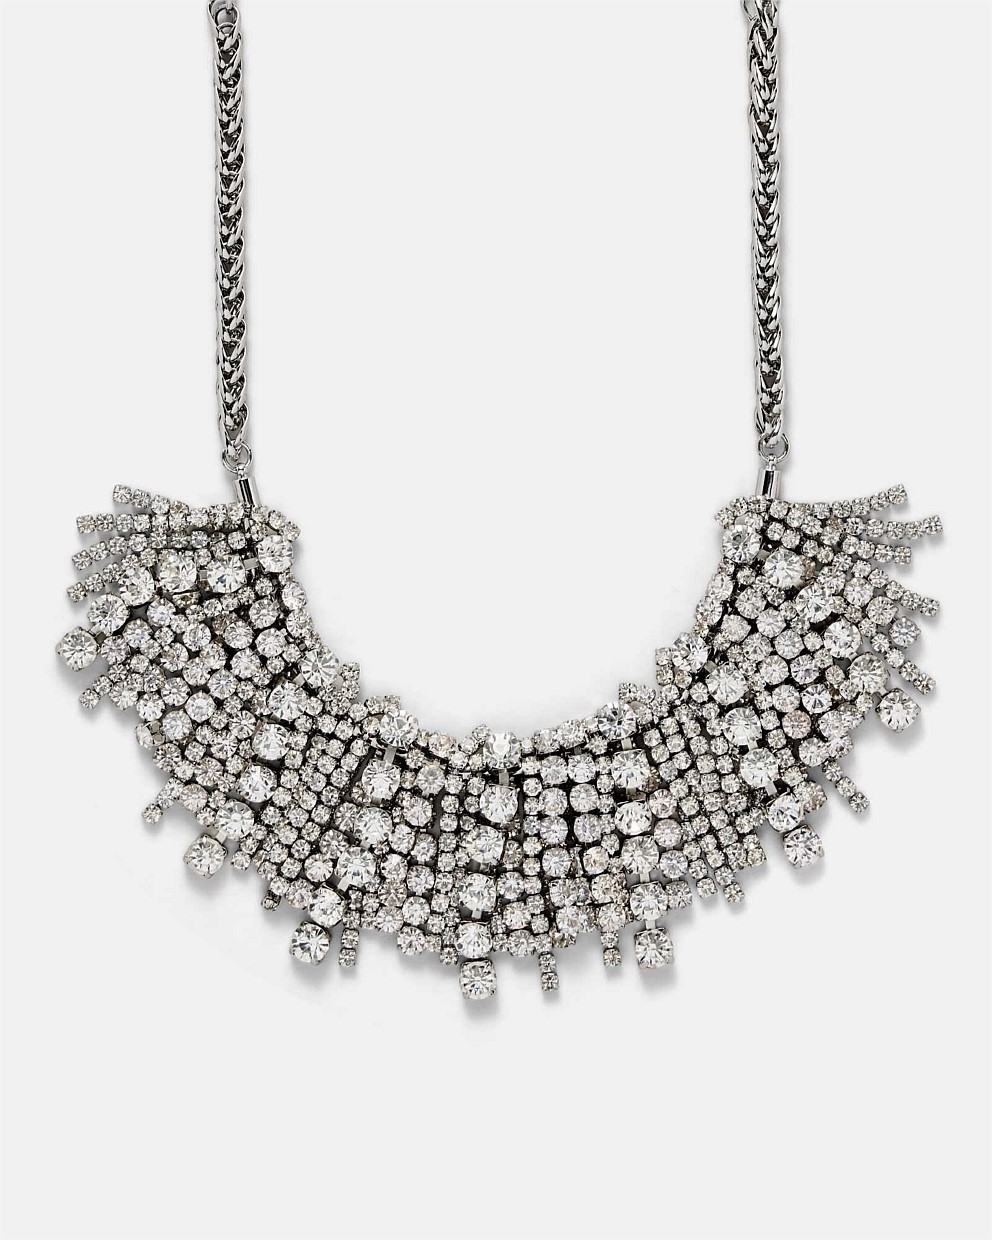 Statement necklace fashion women 2015 collar vintage big chunky chain